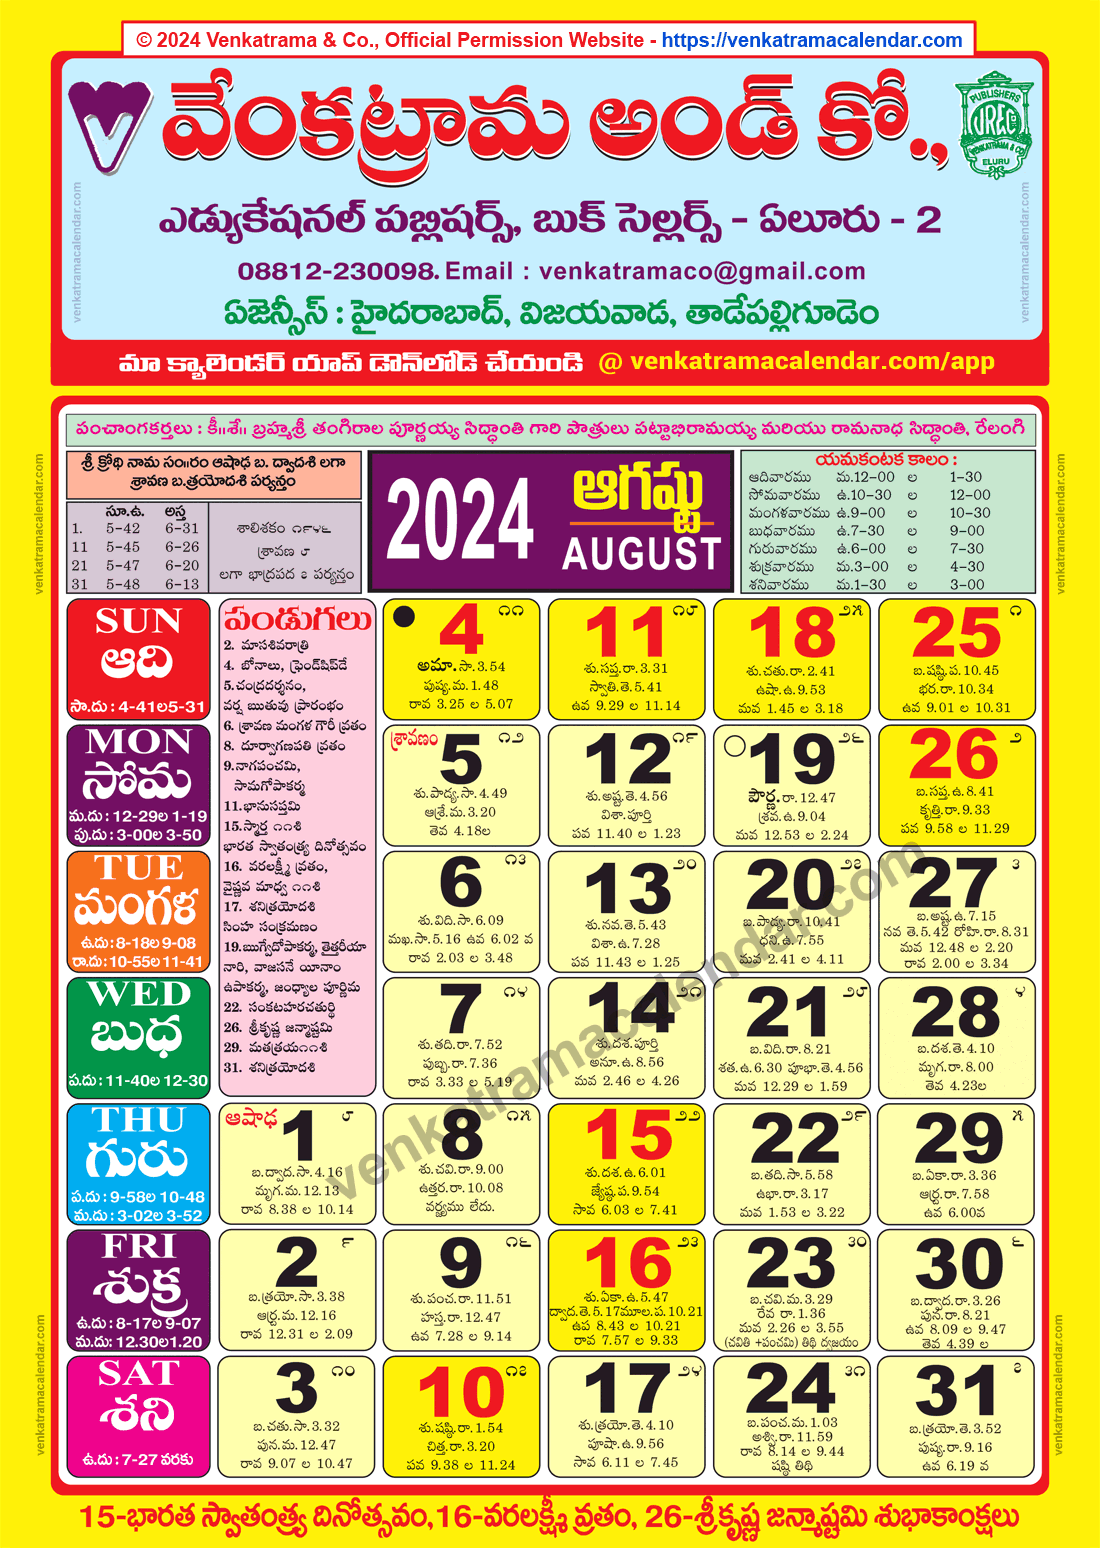 Venkatrama Calendar 2024 August